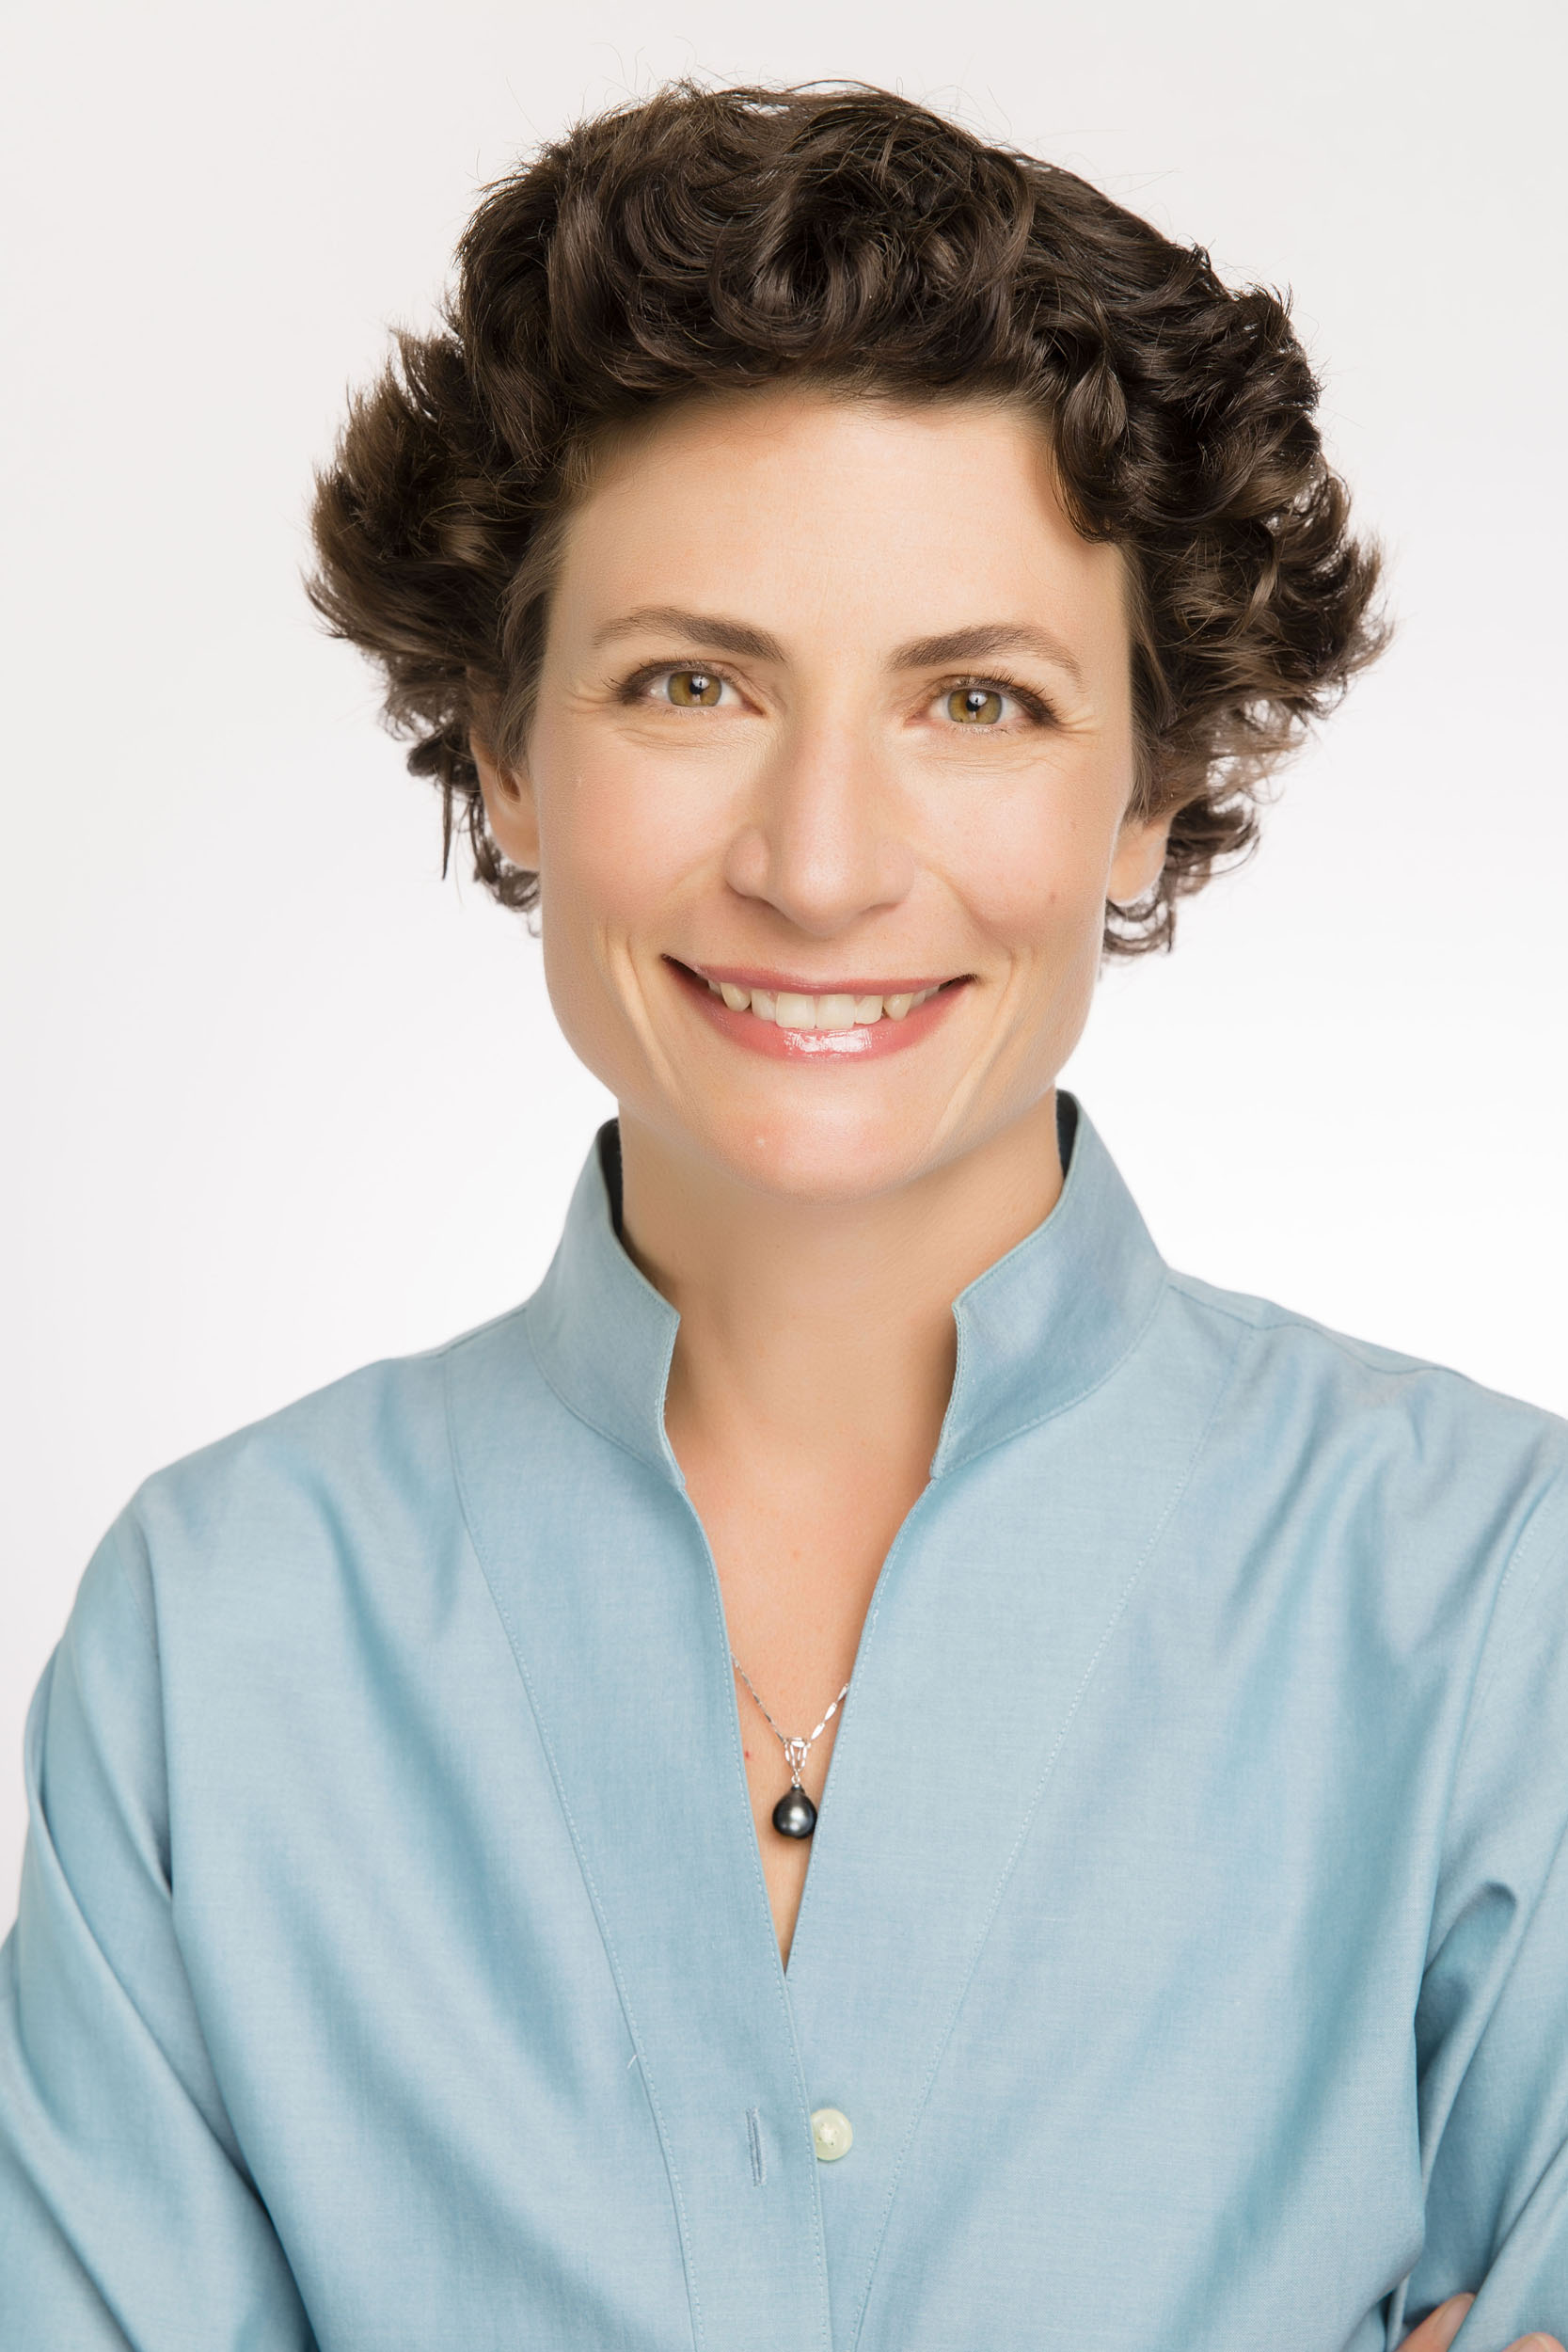 Prof. Sandra Goldmark